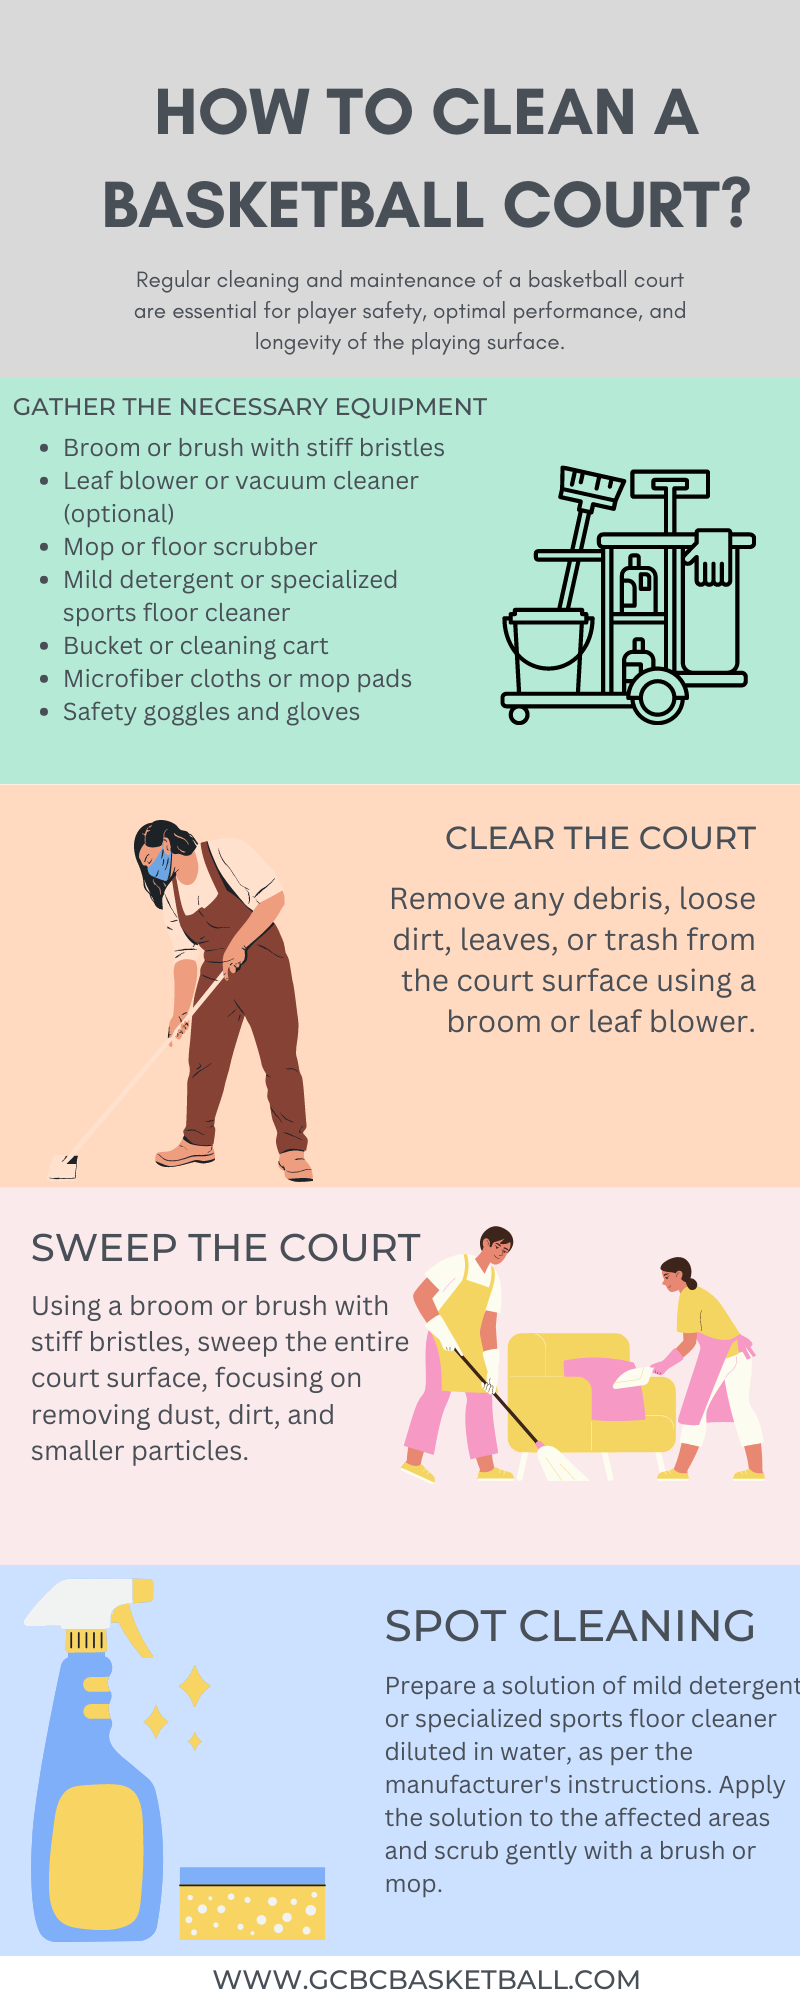 Mop the court